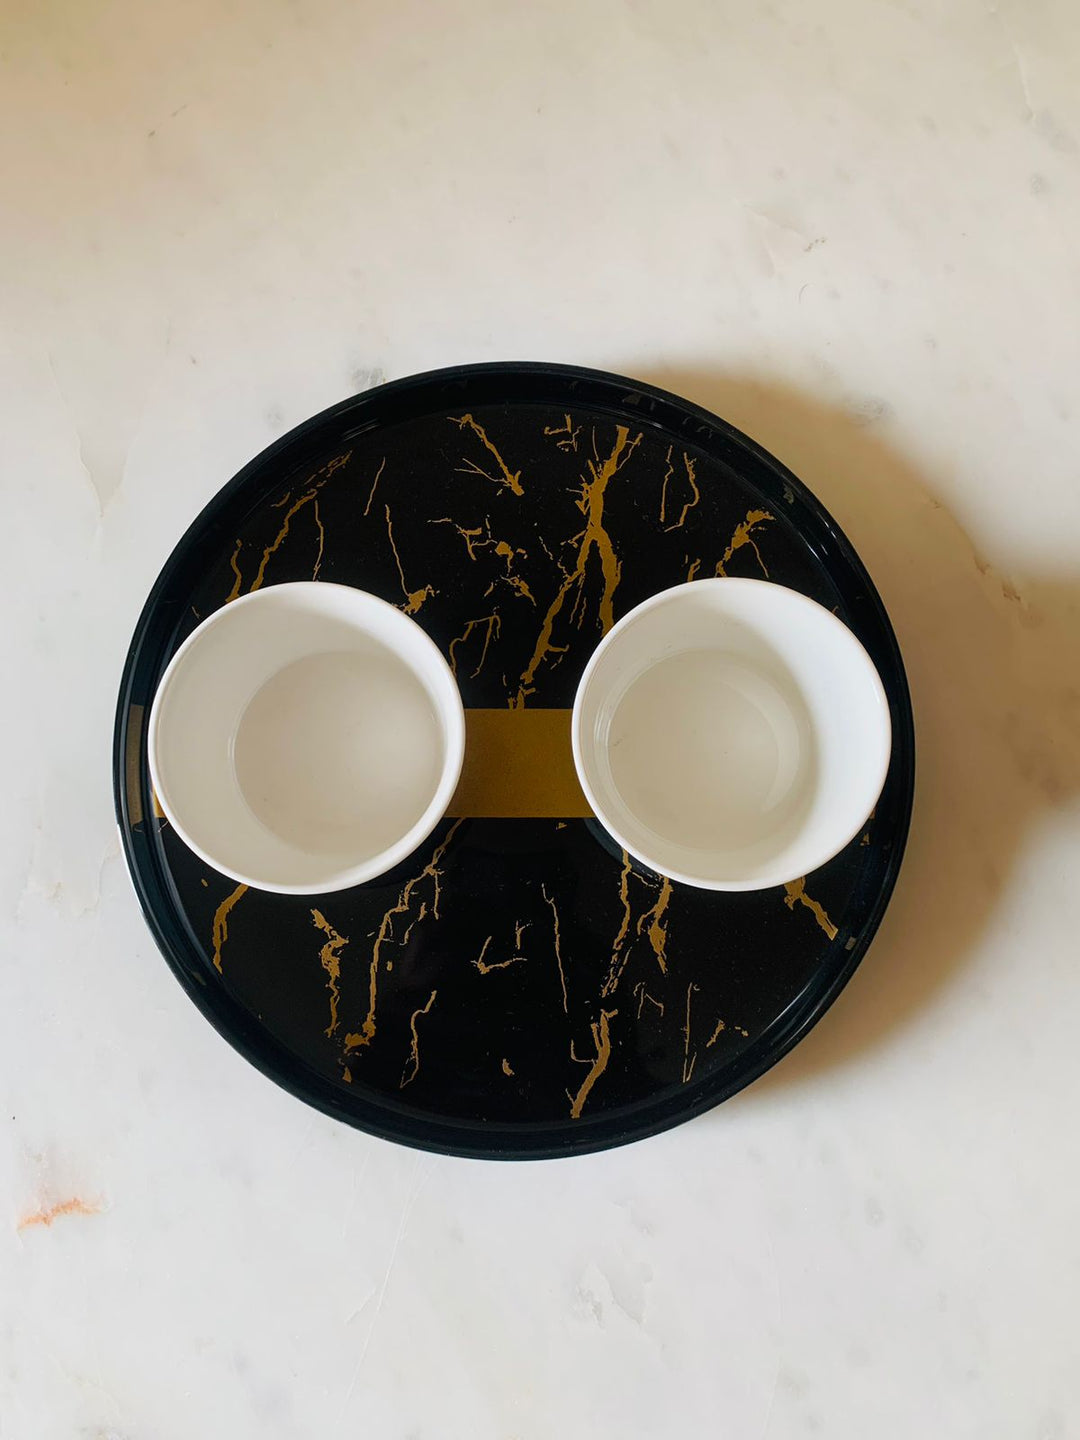 Ceramic Platter With 2 Bowls| Serving & Dining | Black, White & Golden